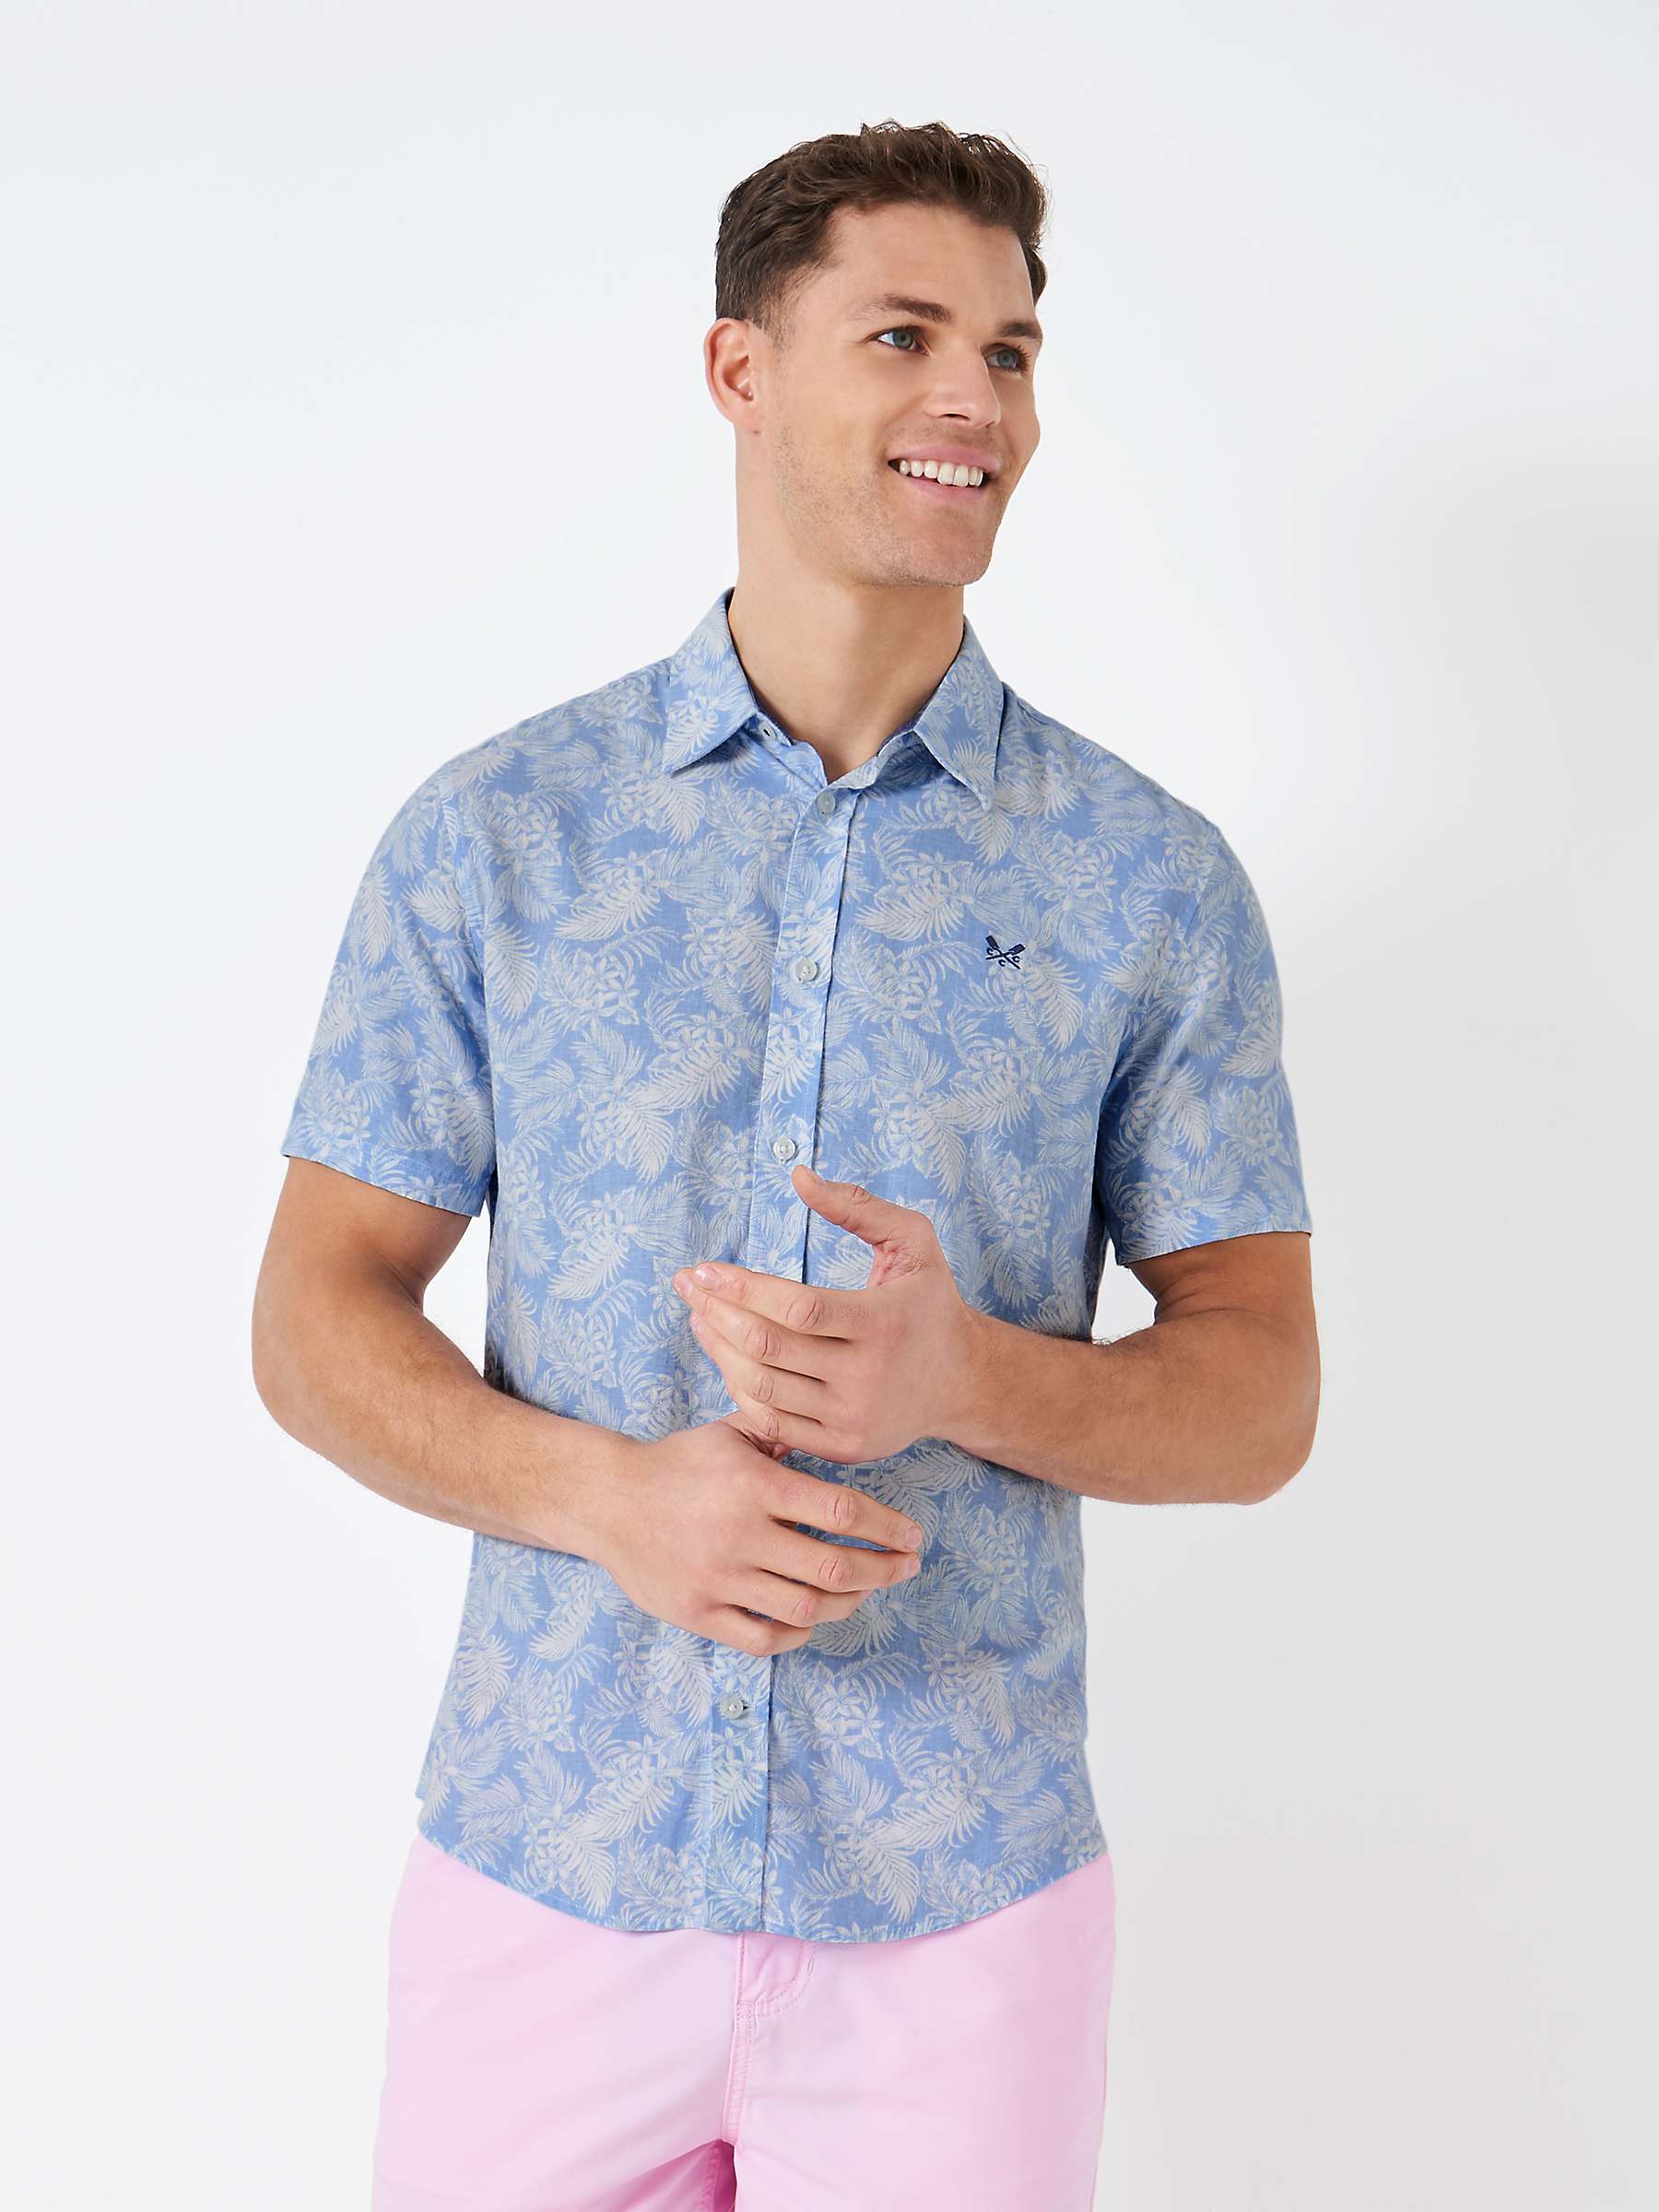 Buy Crew Clothing Short Sleeved Linen Blend Leaf Print Shirt, Light Blue/White Online at johnlewis.com